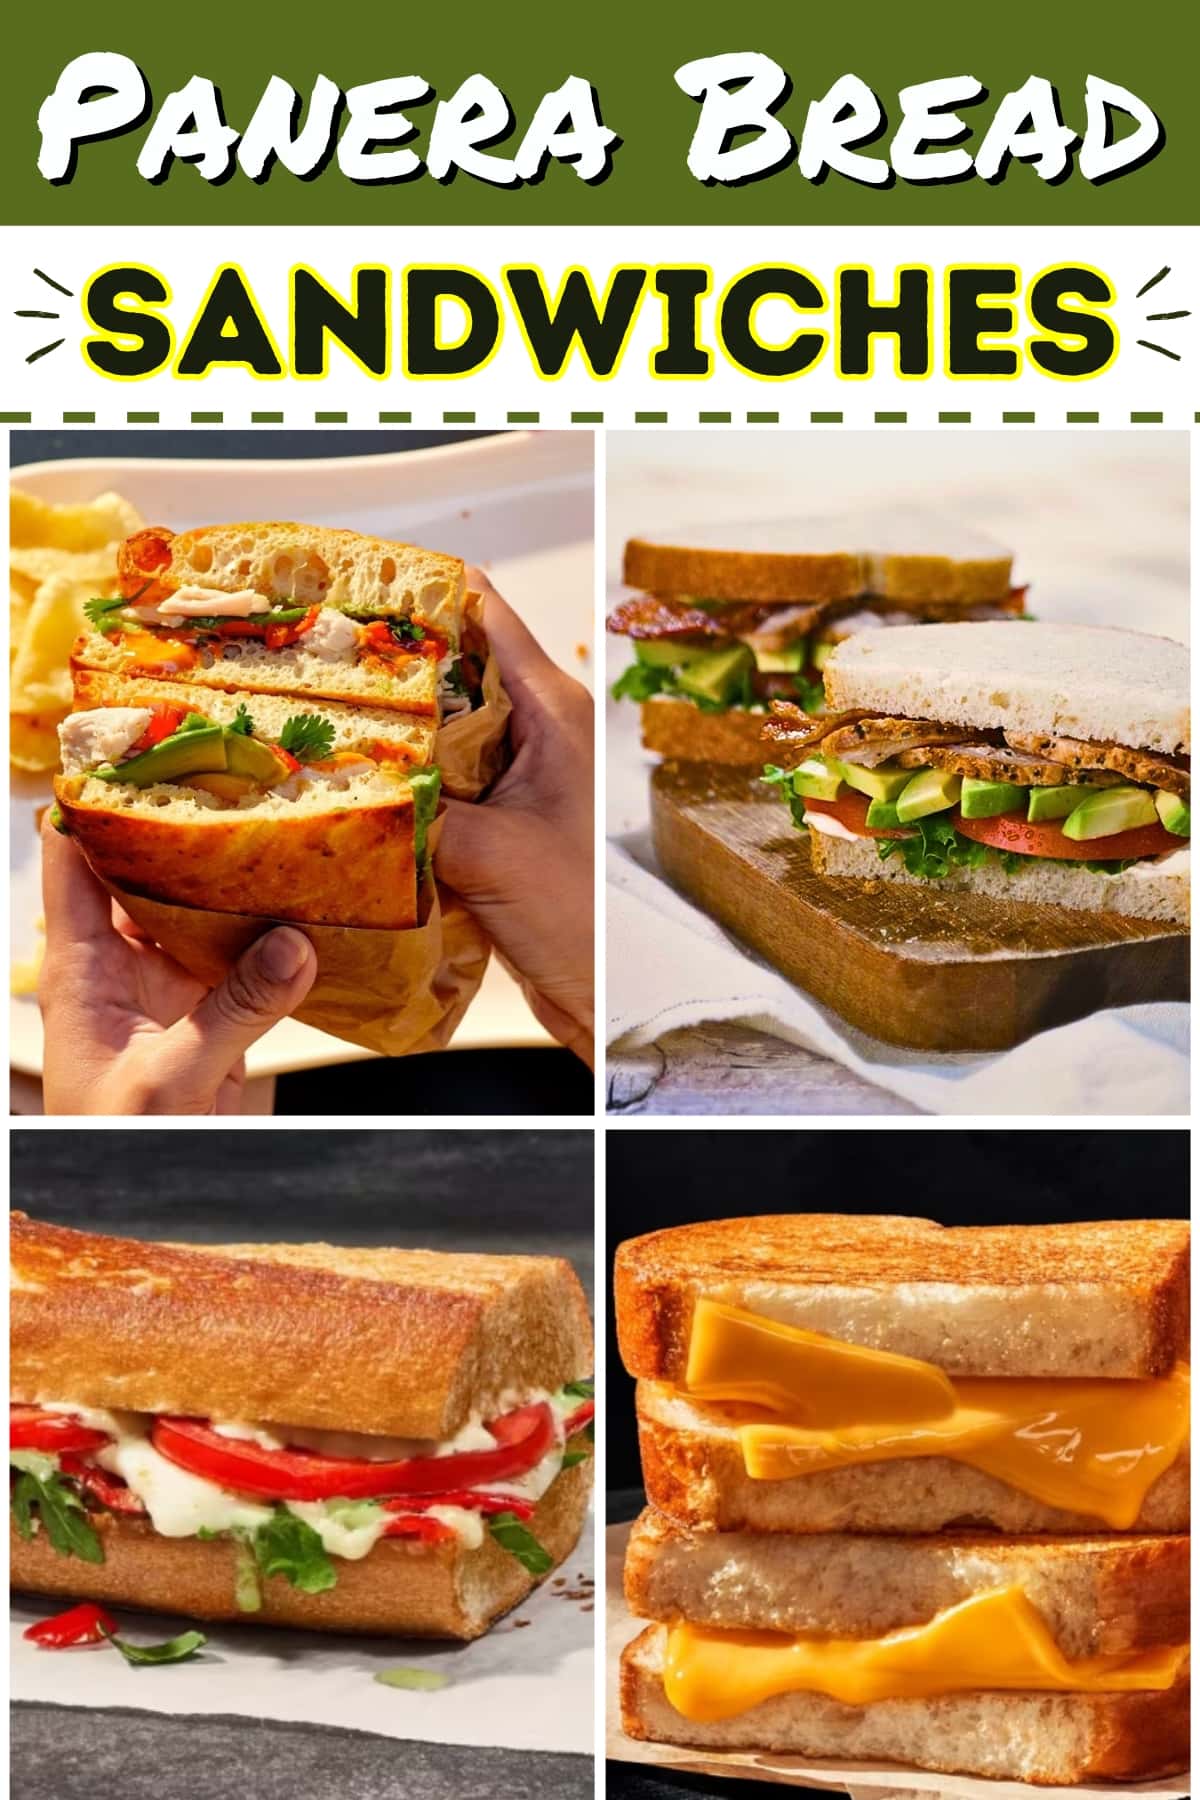 Panera Bread Sandwiches